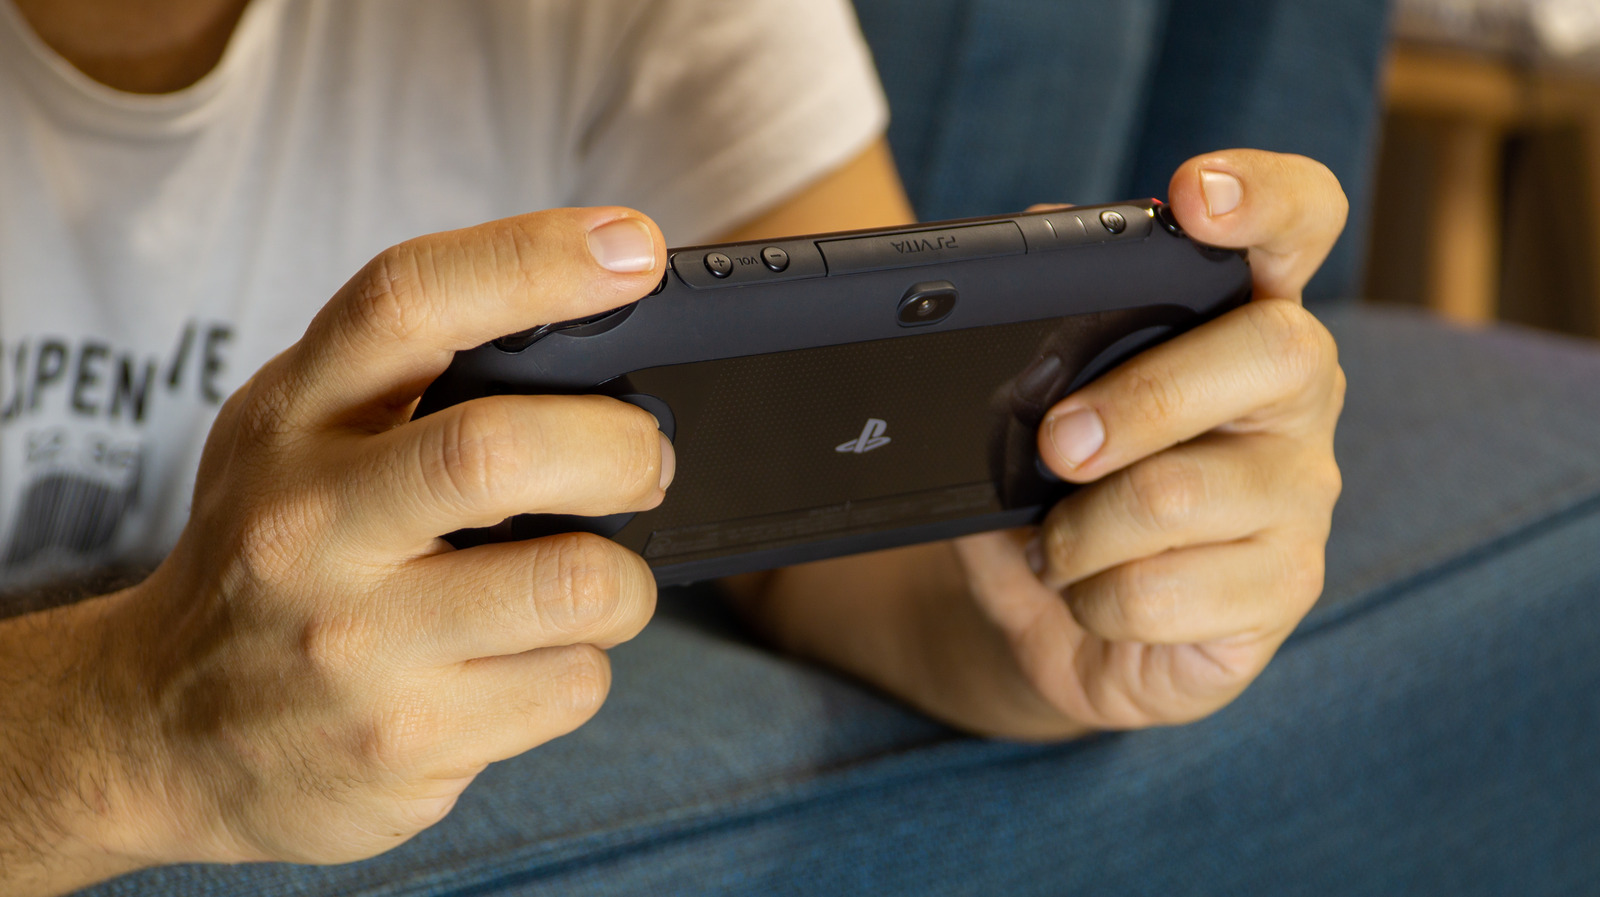 New PlayStation handheld: Not Vita 2, remote play only, no dedicated gaming